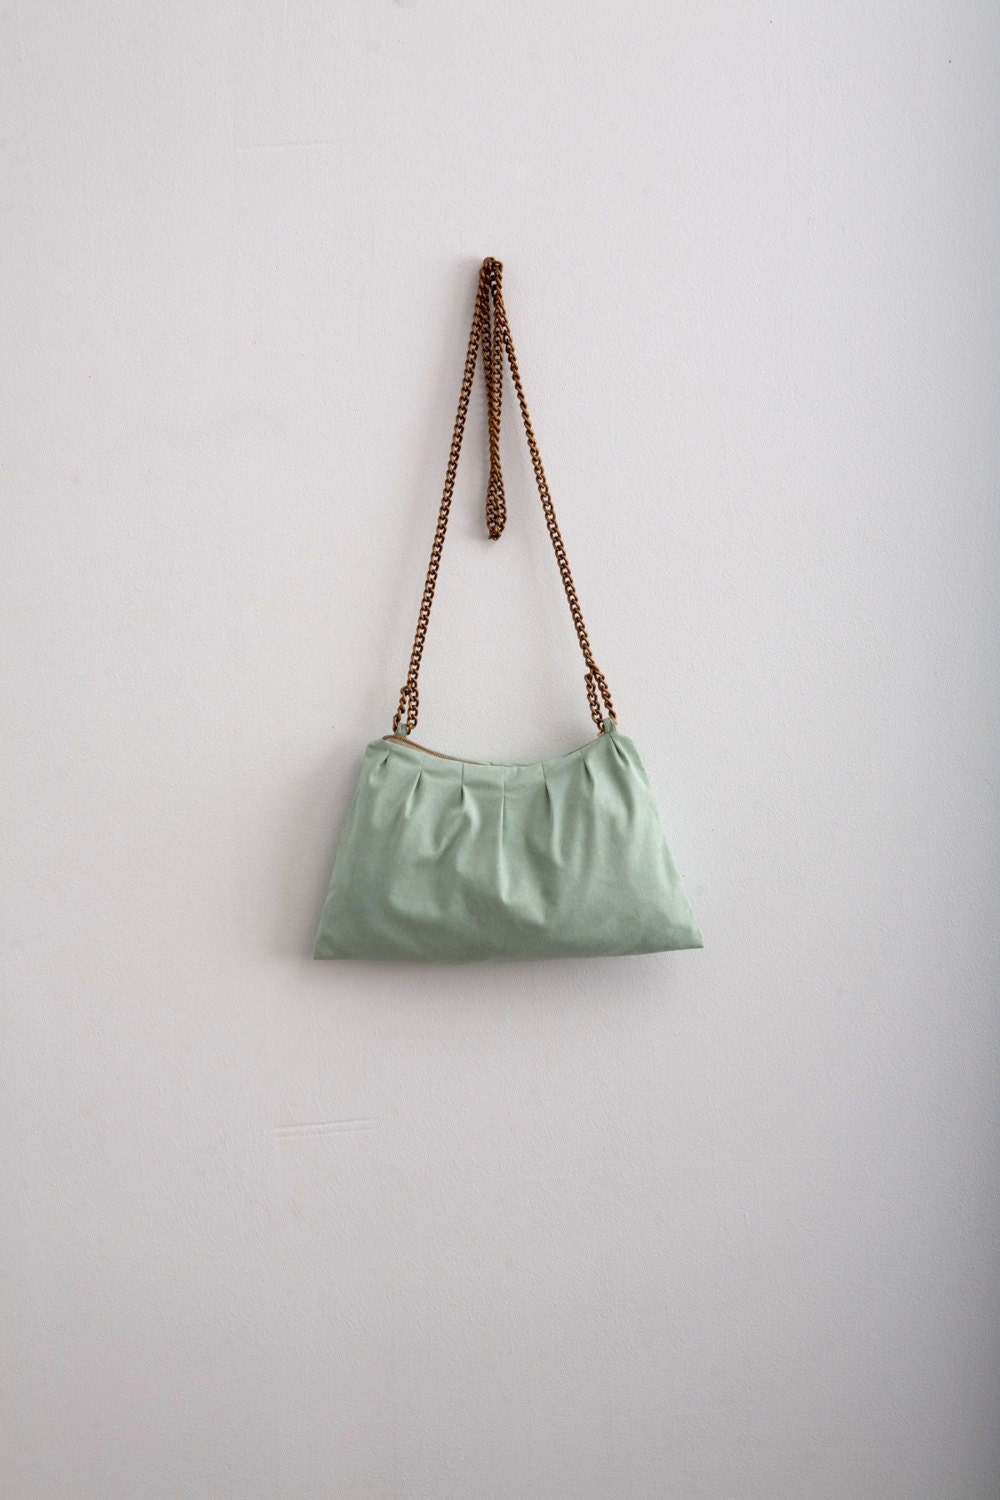 Pastel Green Purse Mint Bag  Faux / Vegan Suede Purse Modern Minimalist Bag Purse  Gift Idea For Her Fall Fashion - Marewo